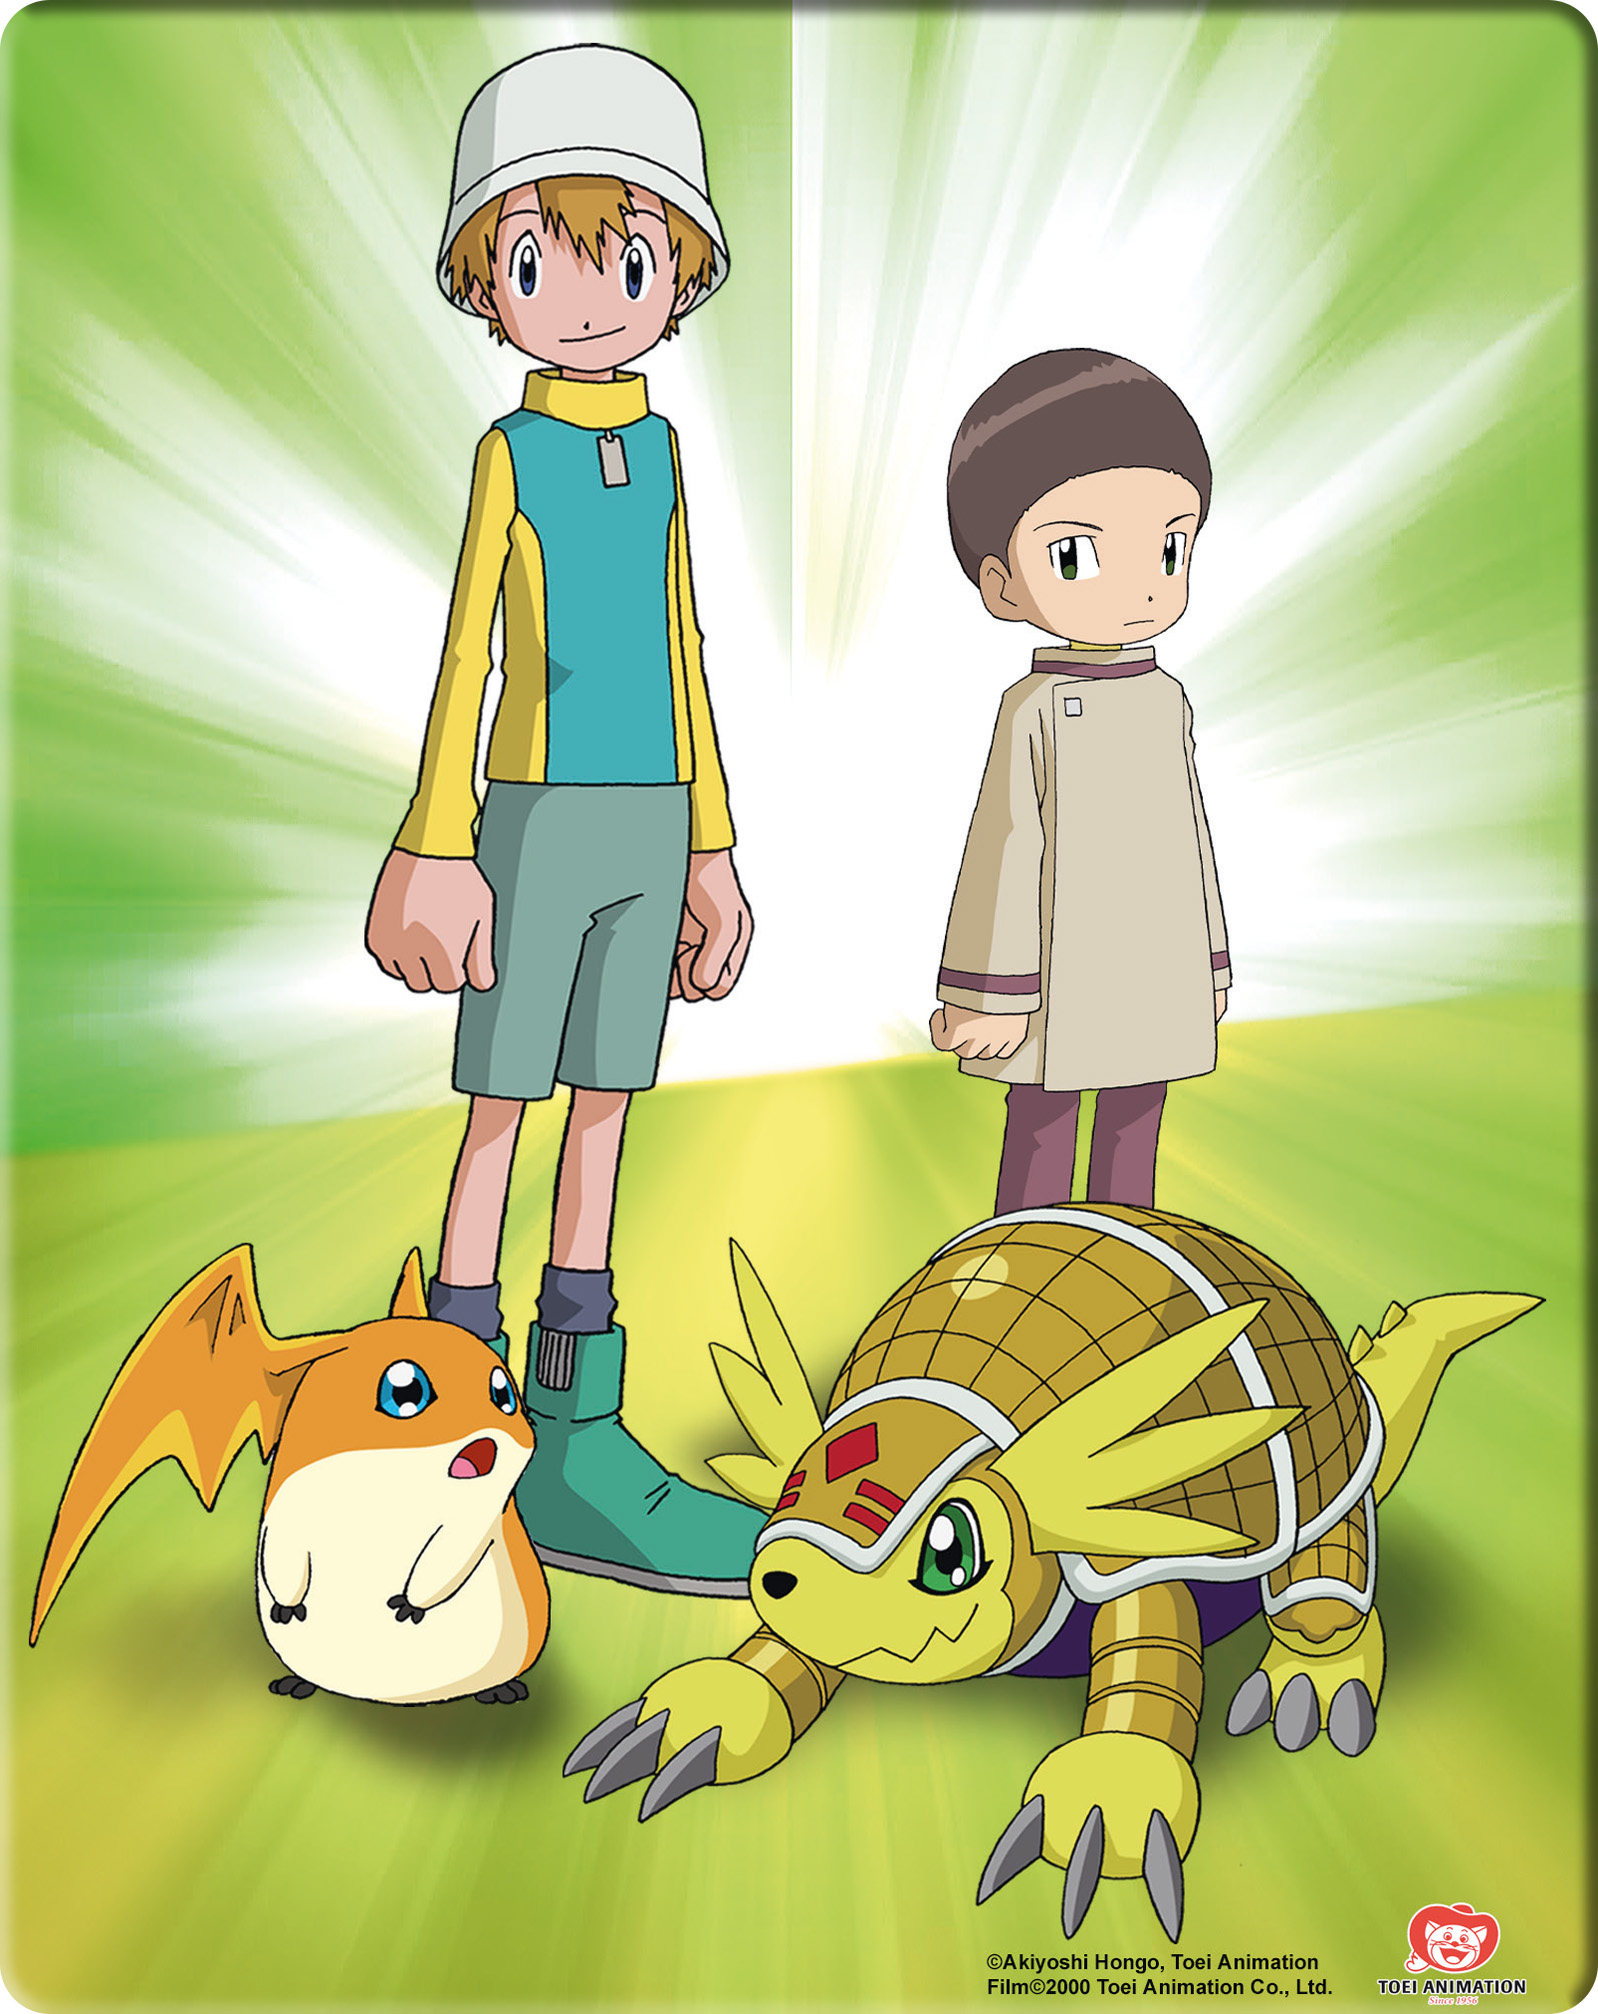 Digimon Adventure 02 - Volume 1 - Limited Edition: Episode 01-17 im FuturePak [Blu-ray] Image 5